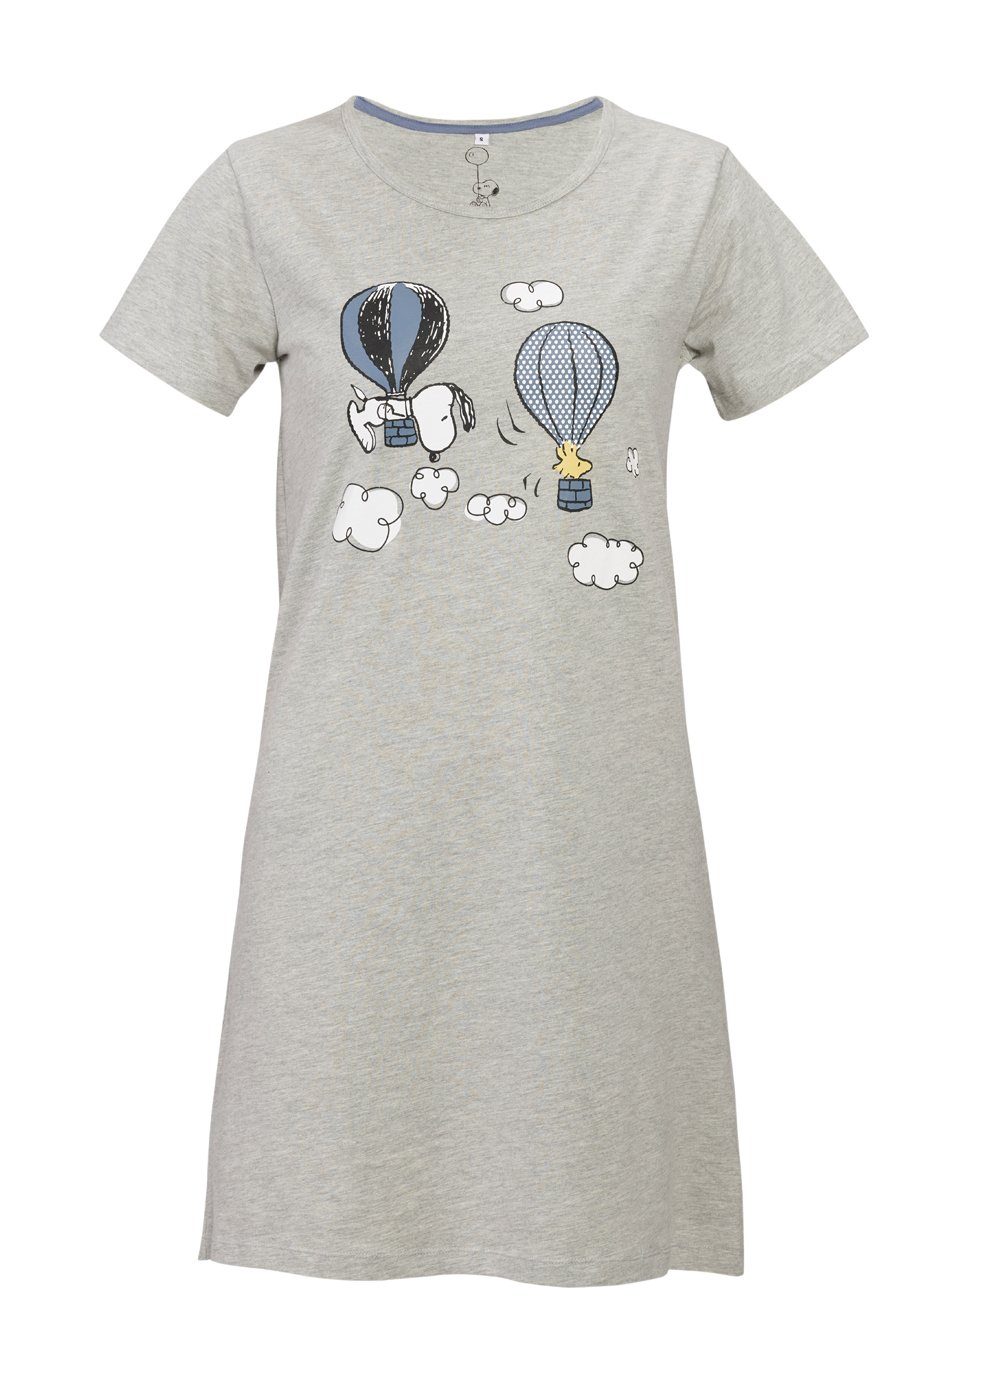 Damen Nacht-Kleid Grau ONOMATO! Nachthemd Schlafshirt Snoopy Peanuts